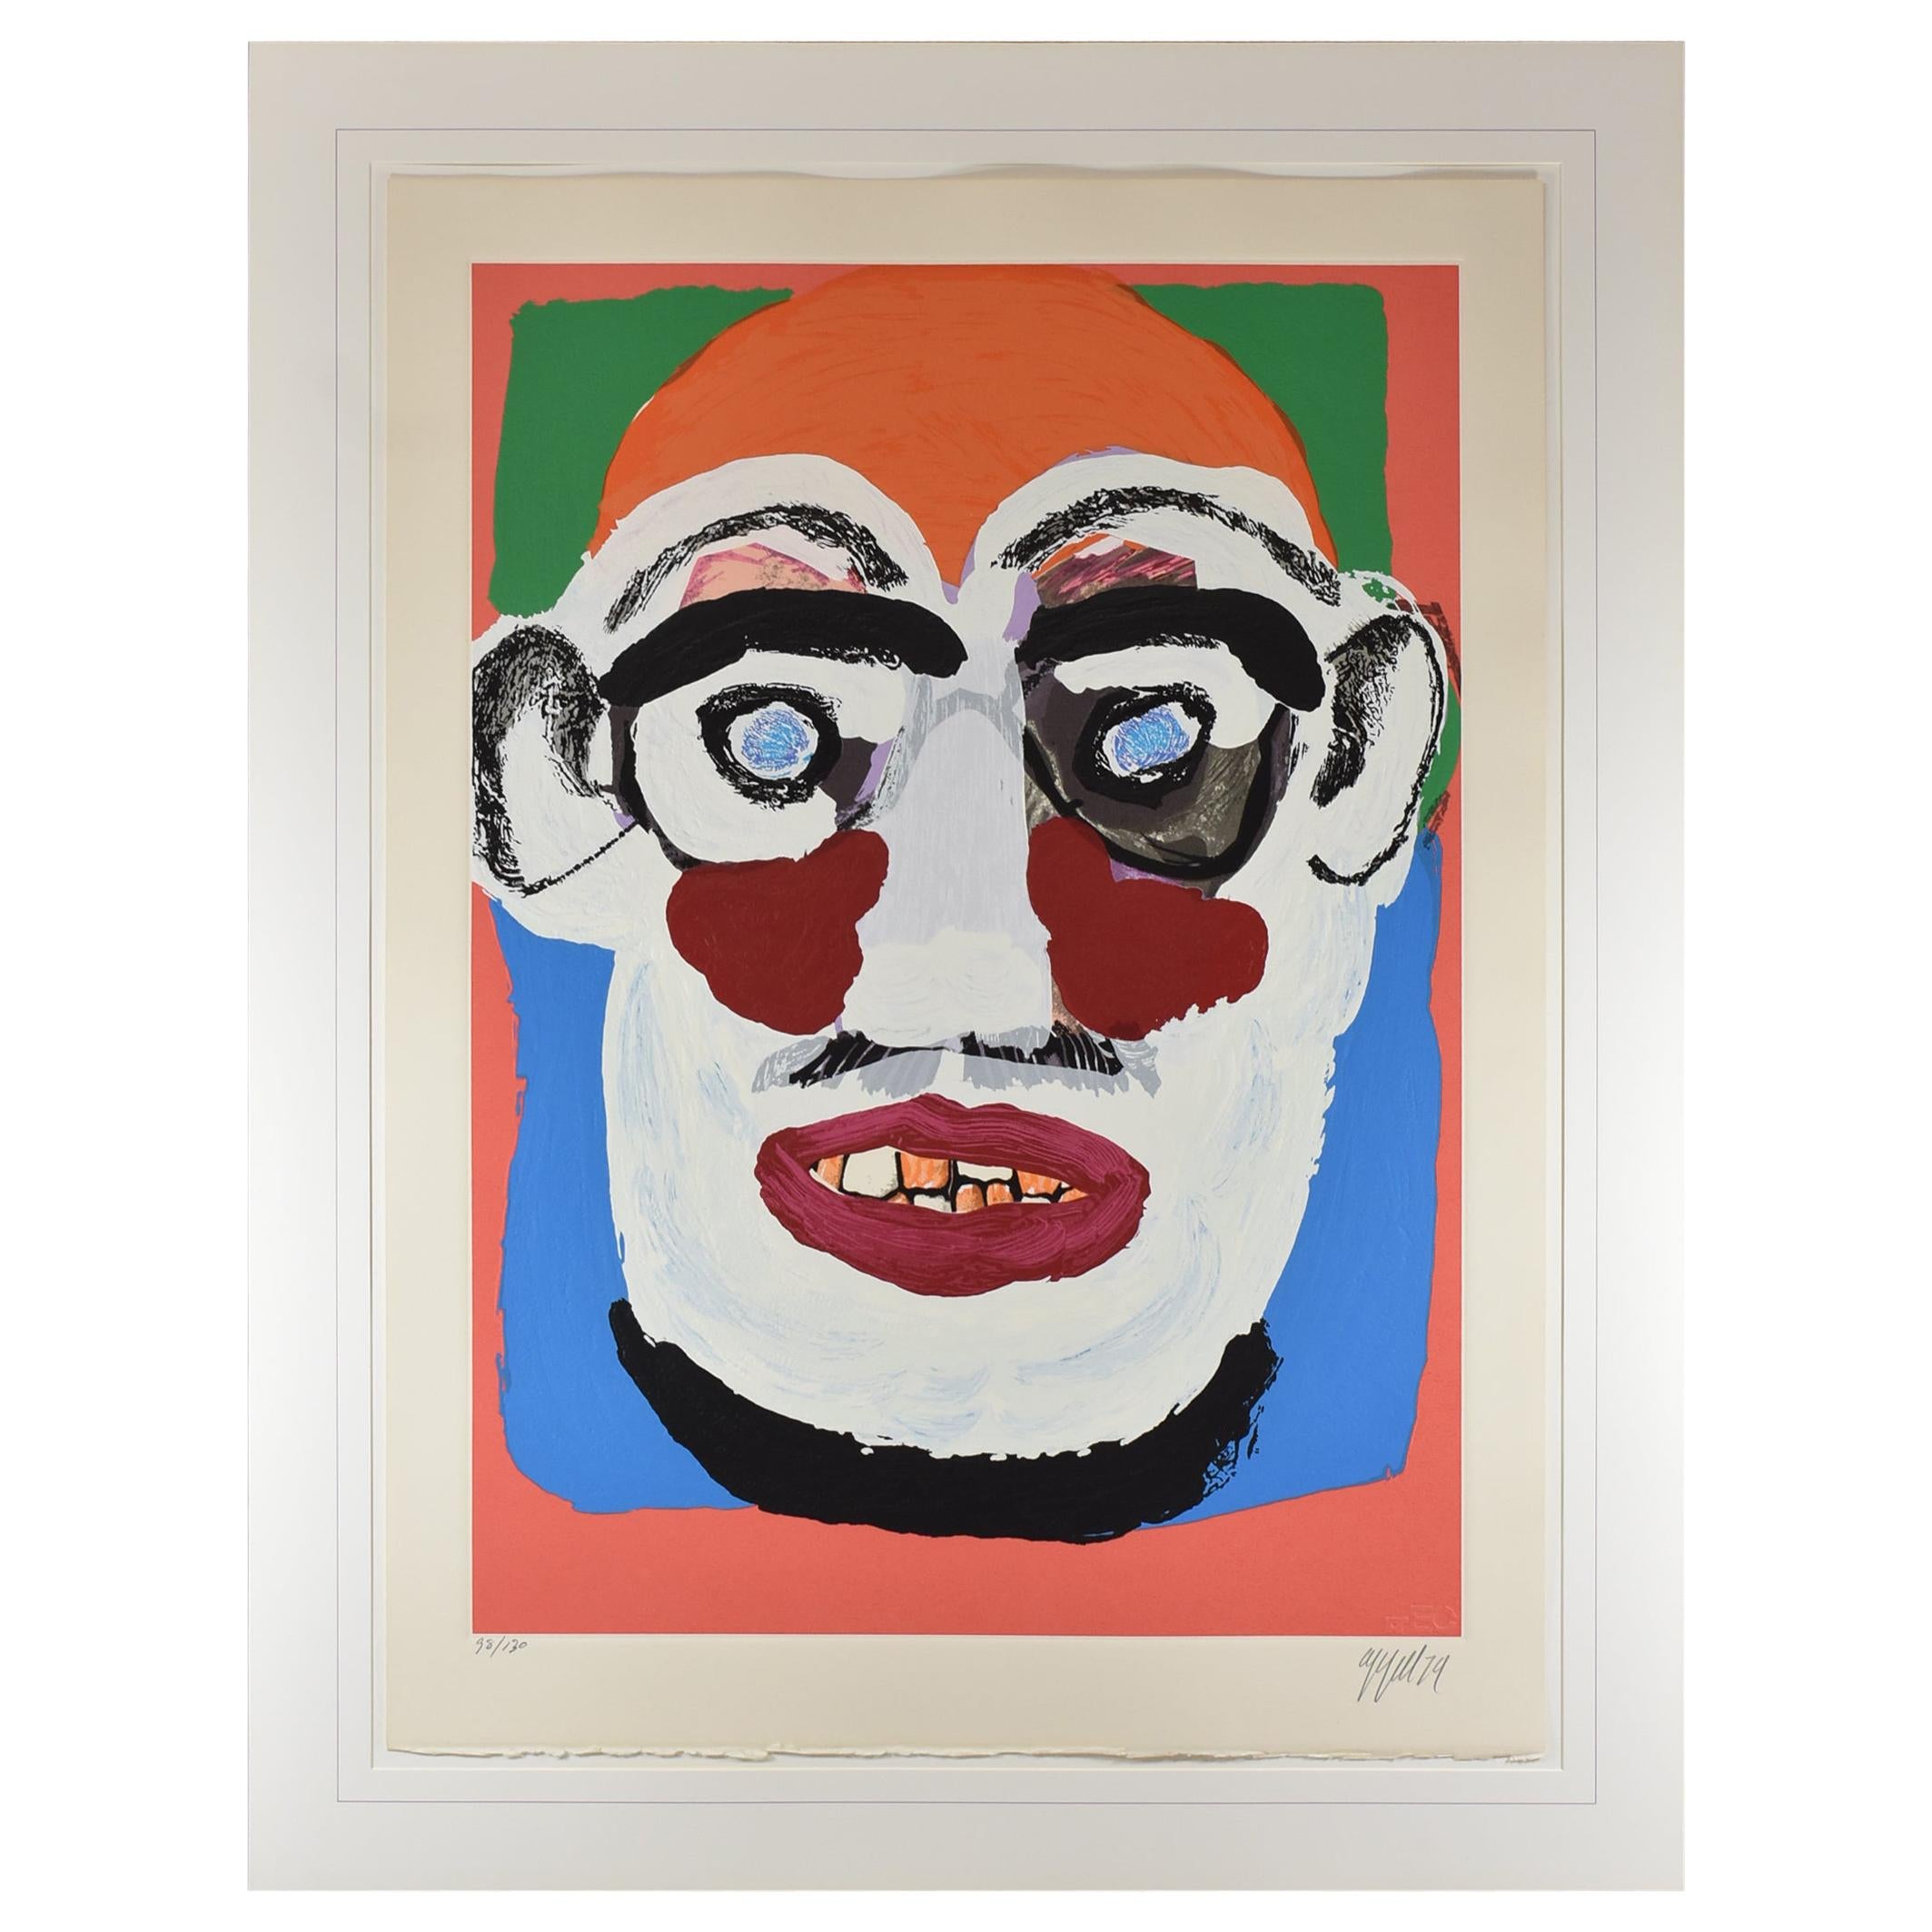 Karel Appel "Face" 1979 98/130 Signed Lithograph